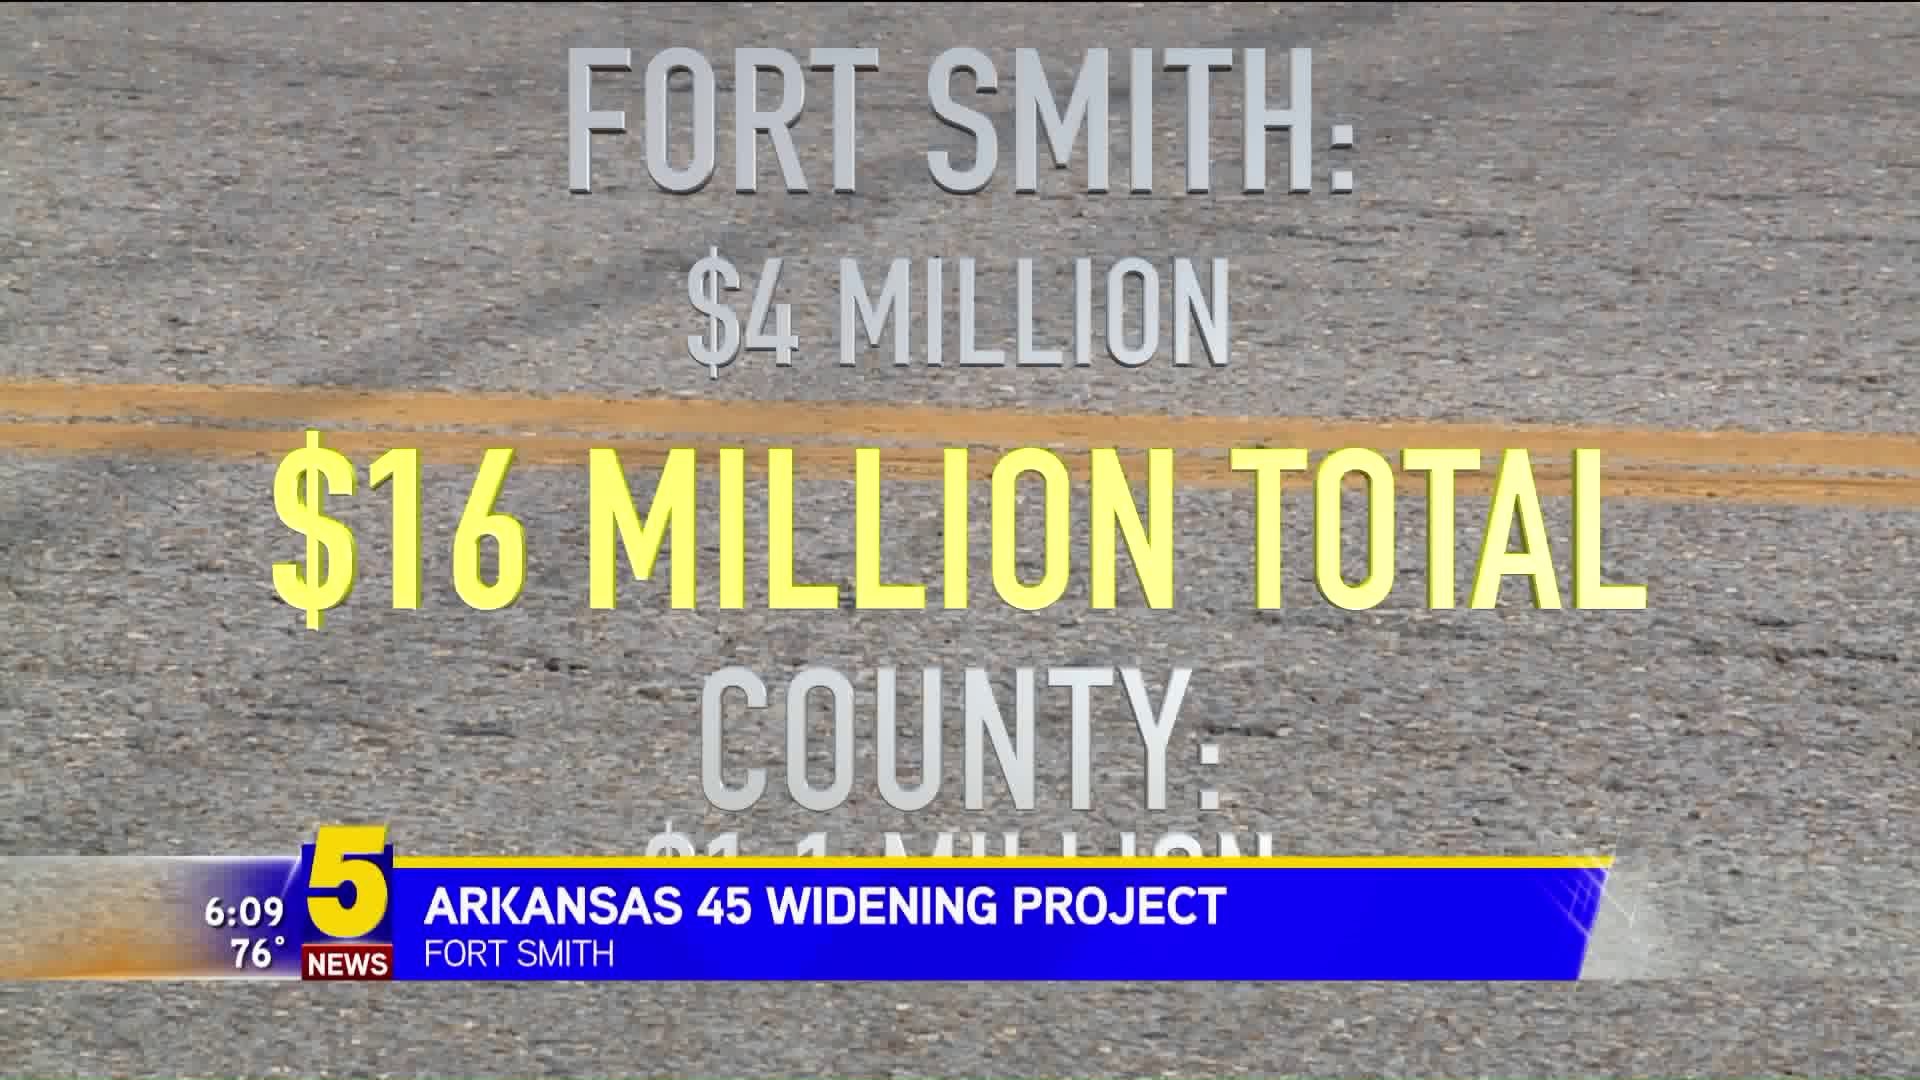 Arkansas 45 Widening Project